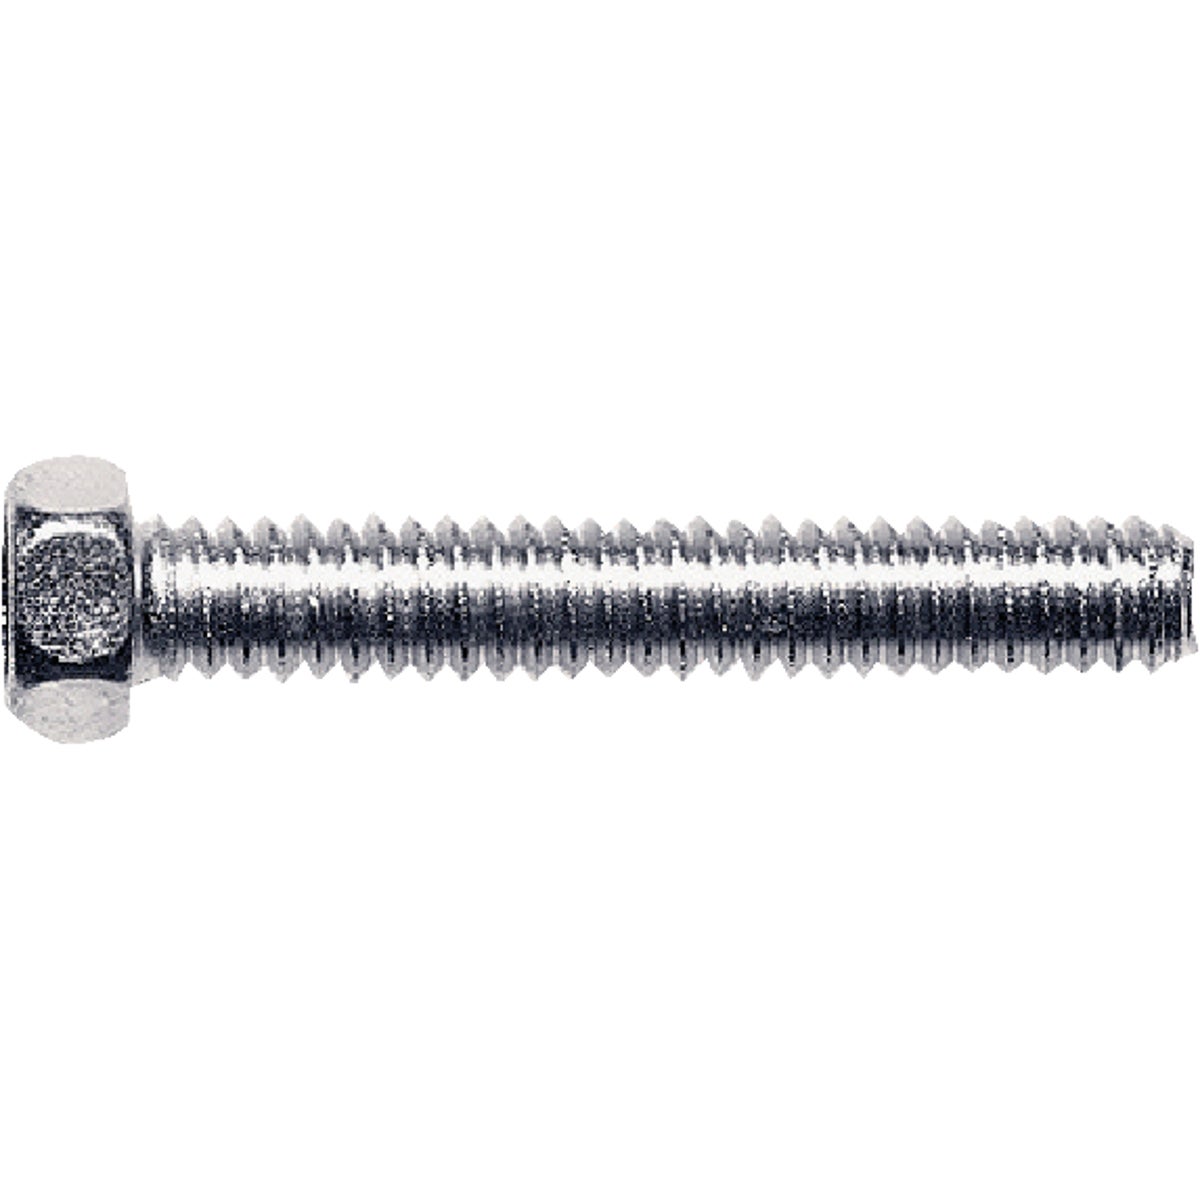 Item 494569, Metal sink clip screw for Danco sink clip model No.